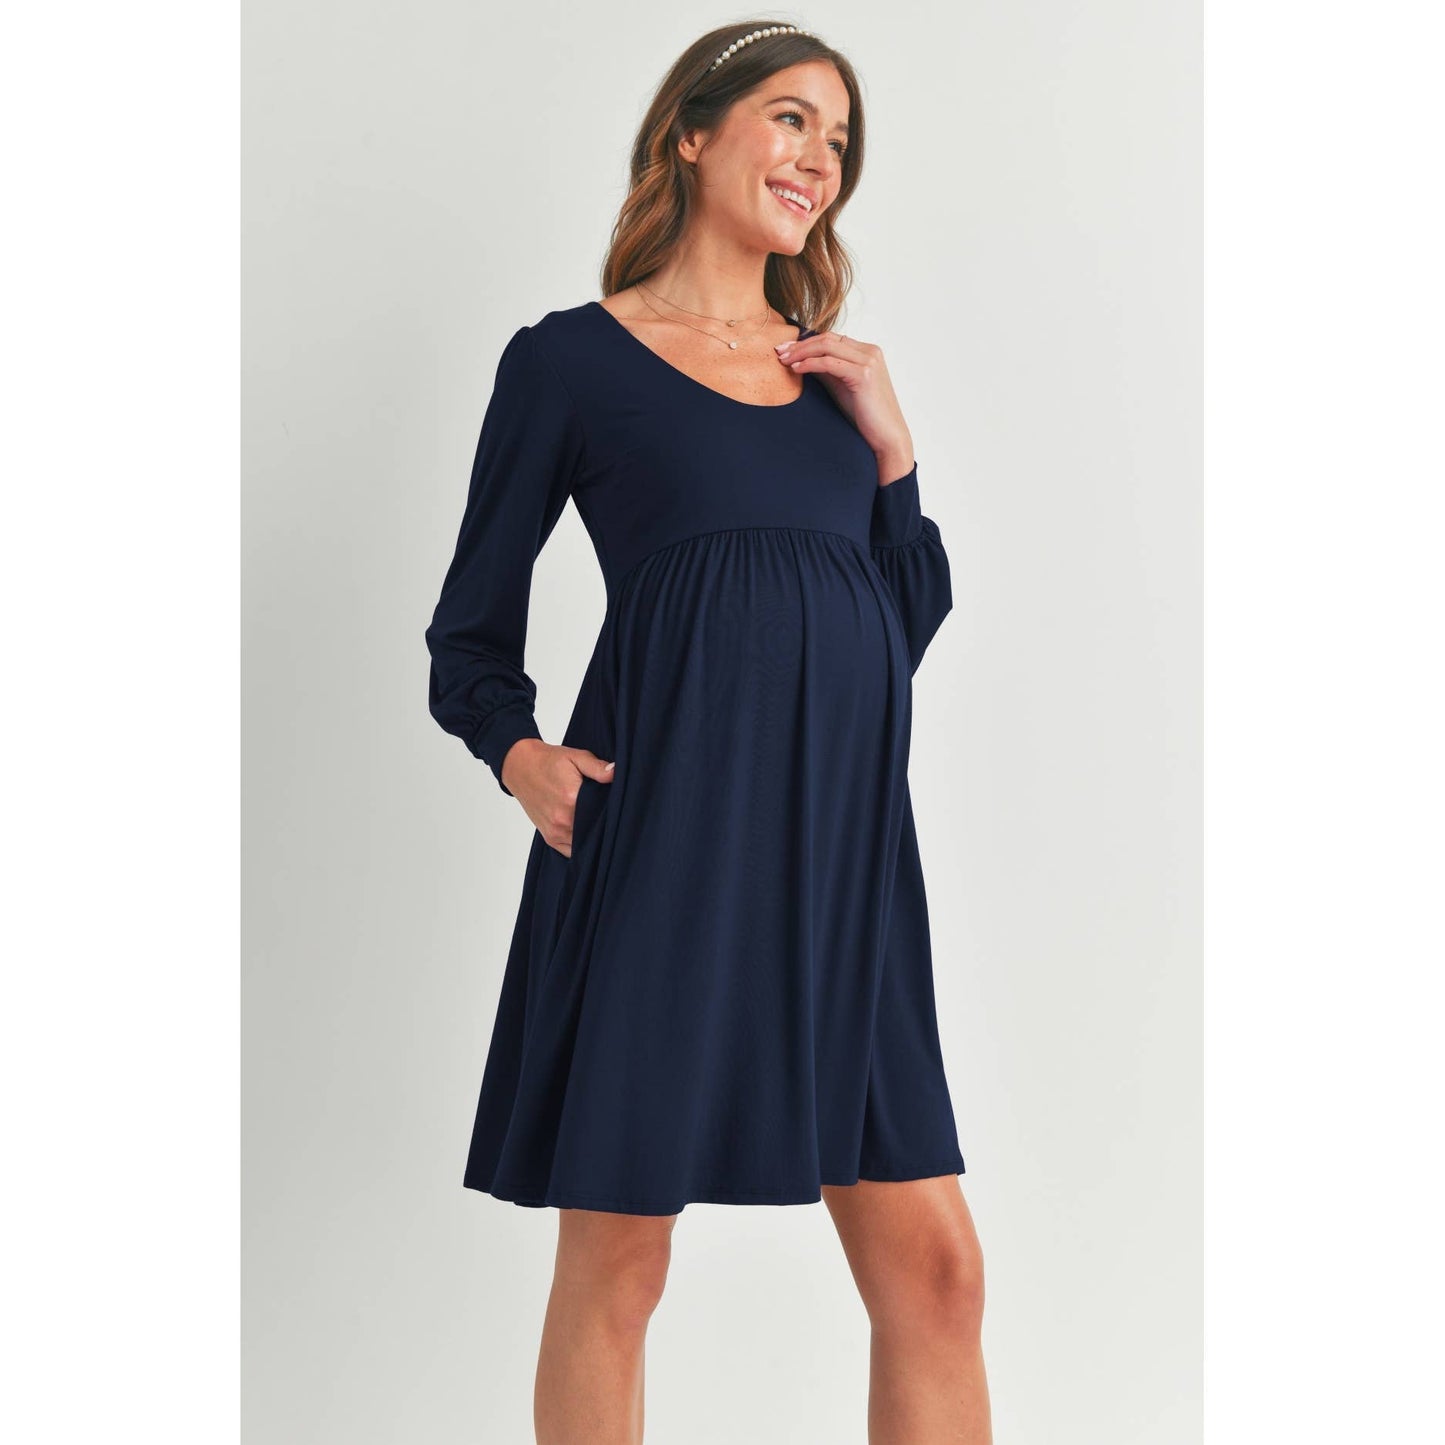 U Neck Puff Sleeve Maternity Dress with Pockets: Navy